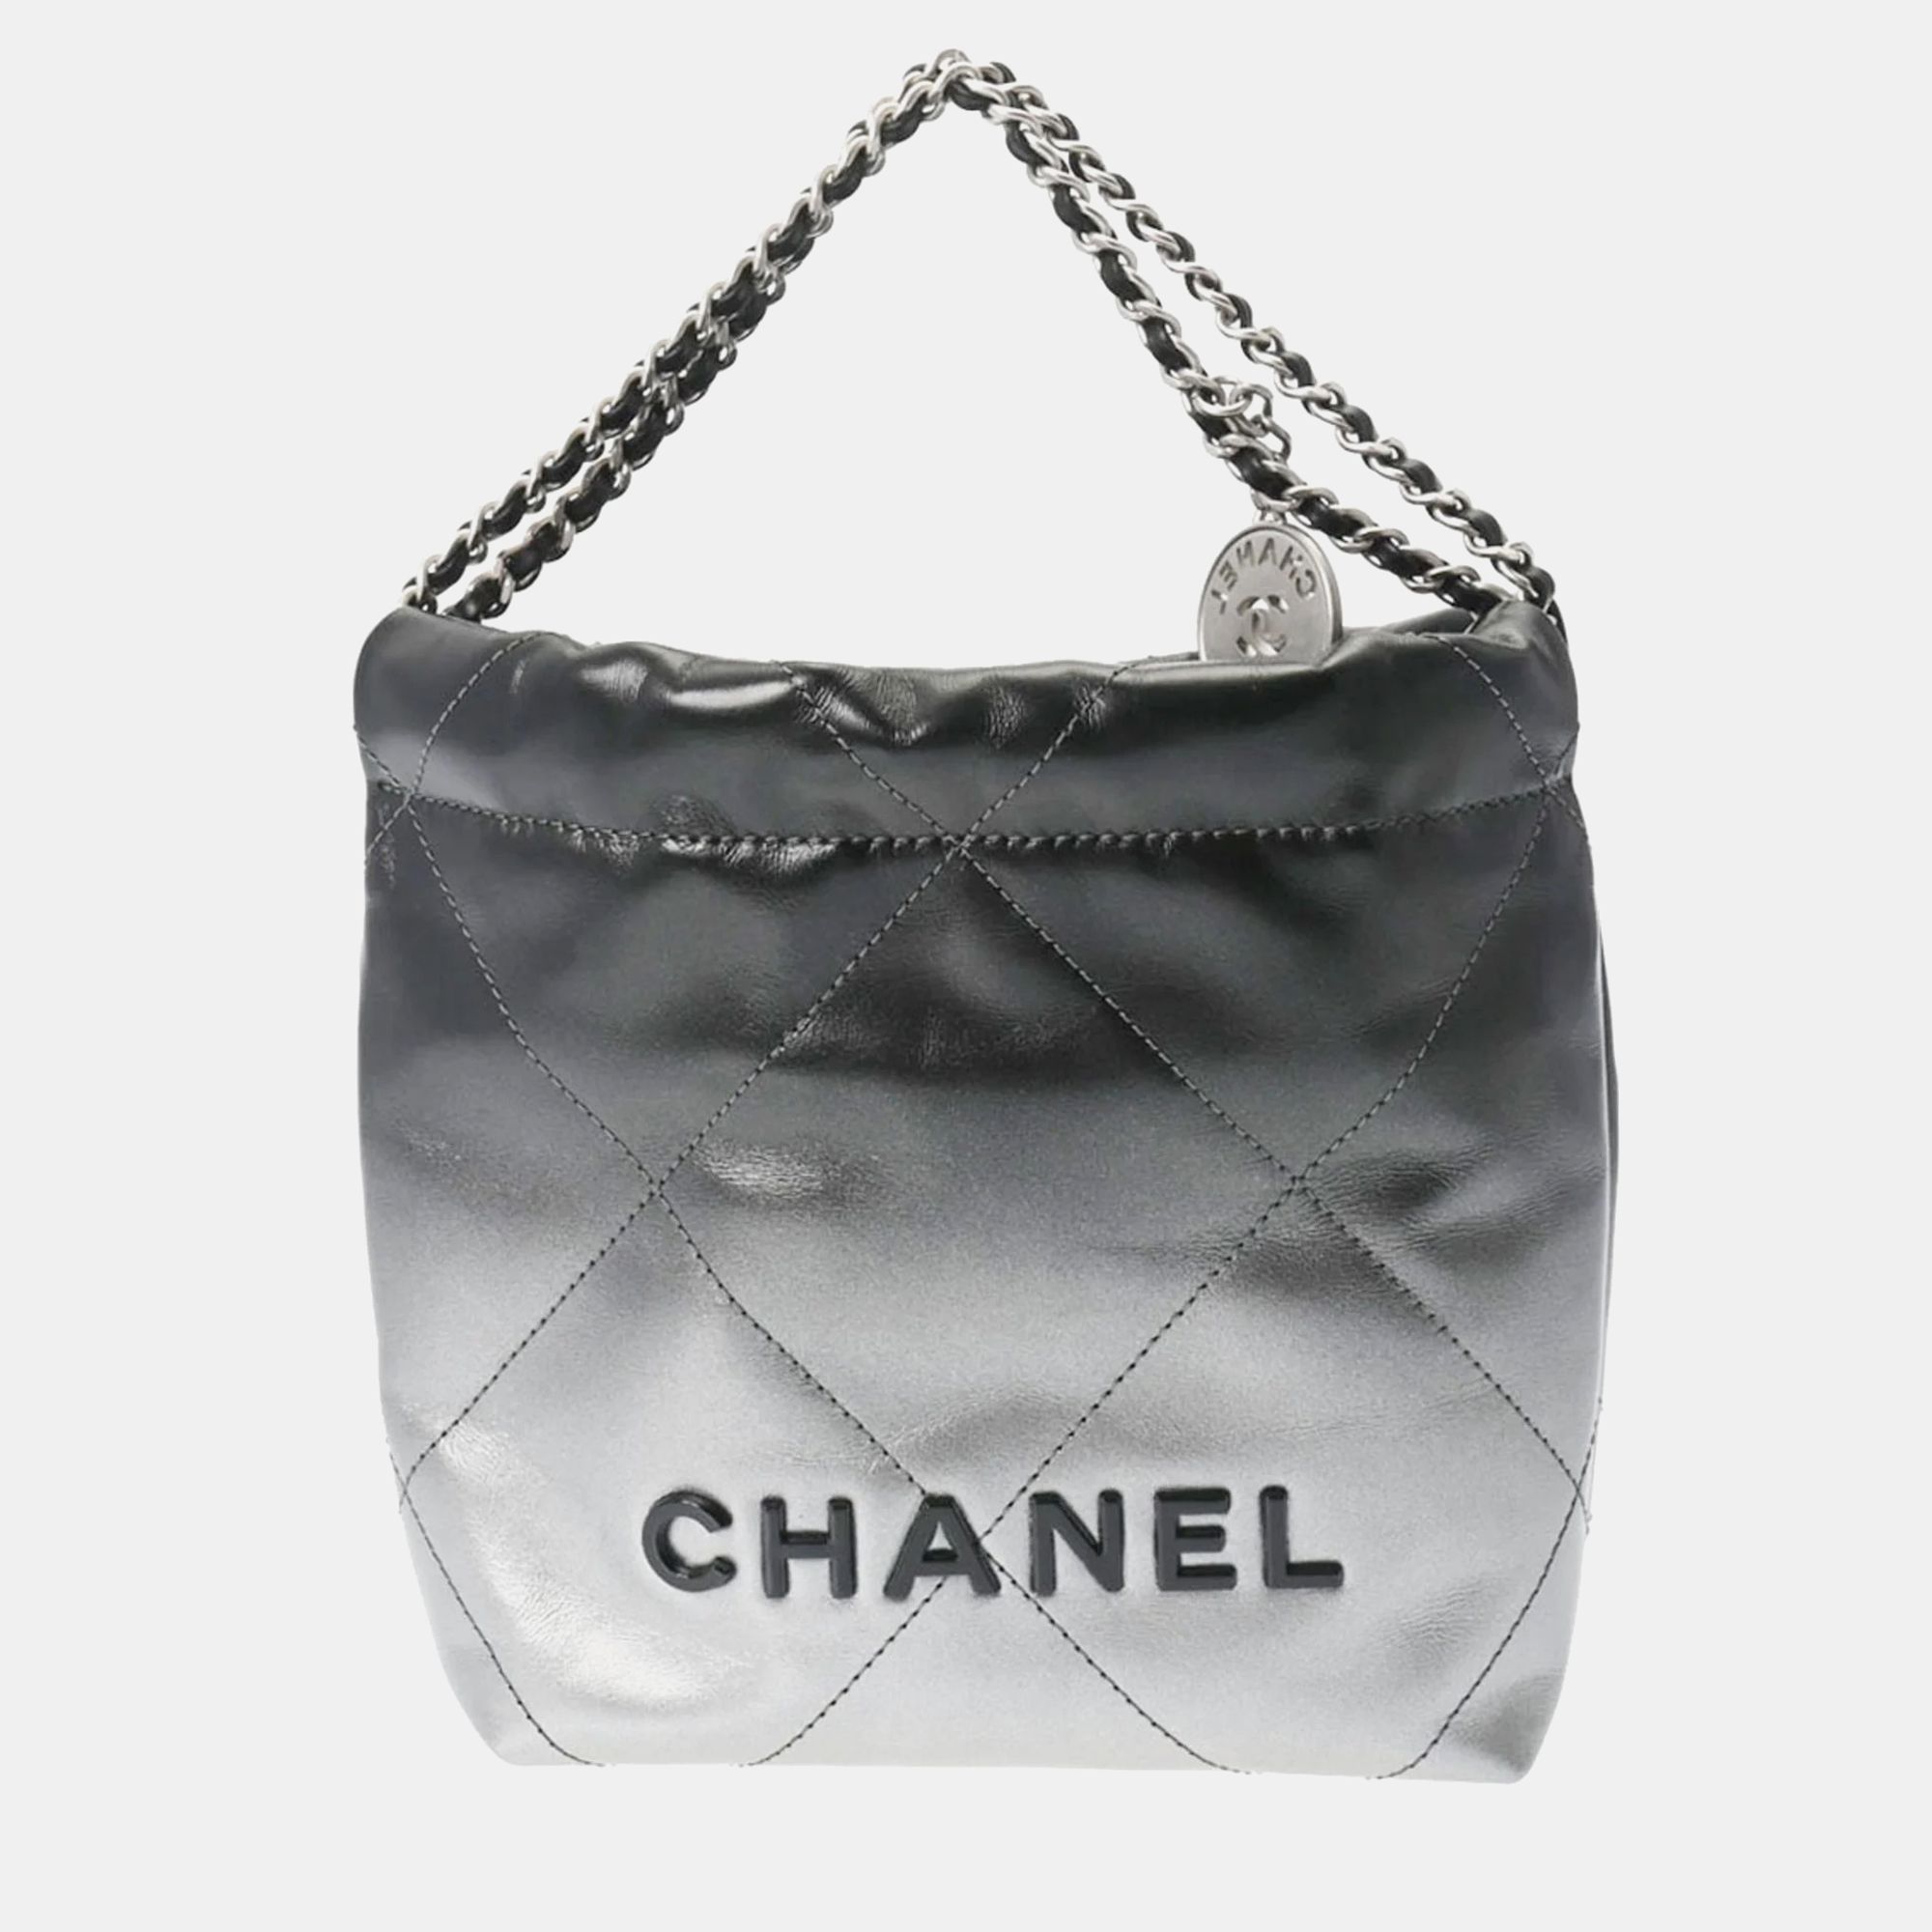 Chanel grey/black quilted calfskin mini 22 hobo bag